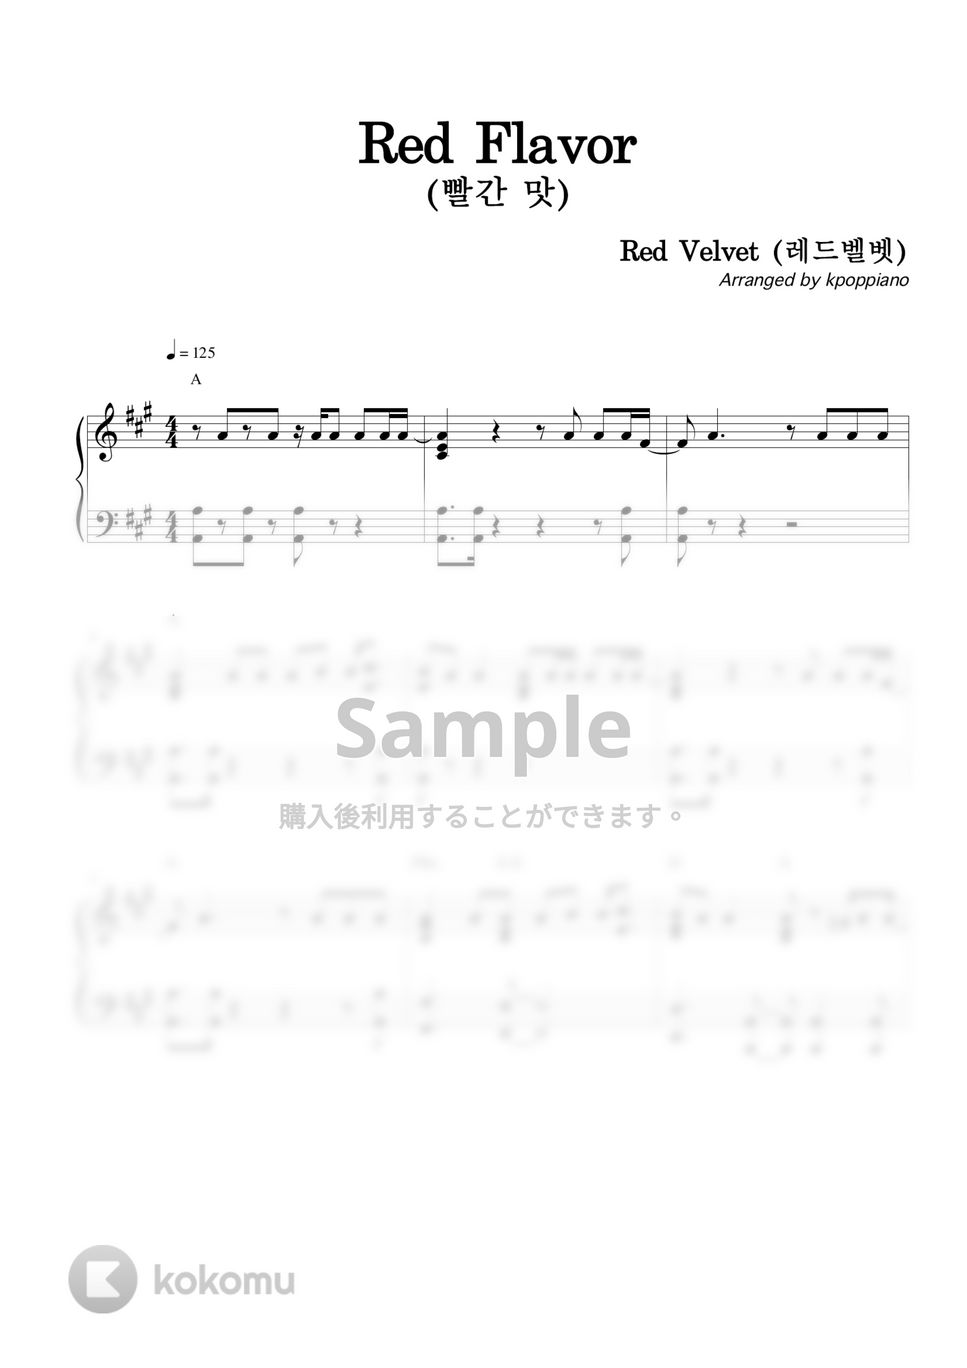 Red Velvet - 赤い味 (Red Flavor) by KPOP PIANO